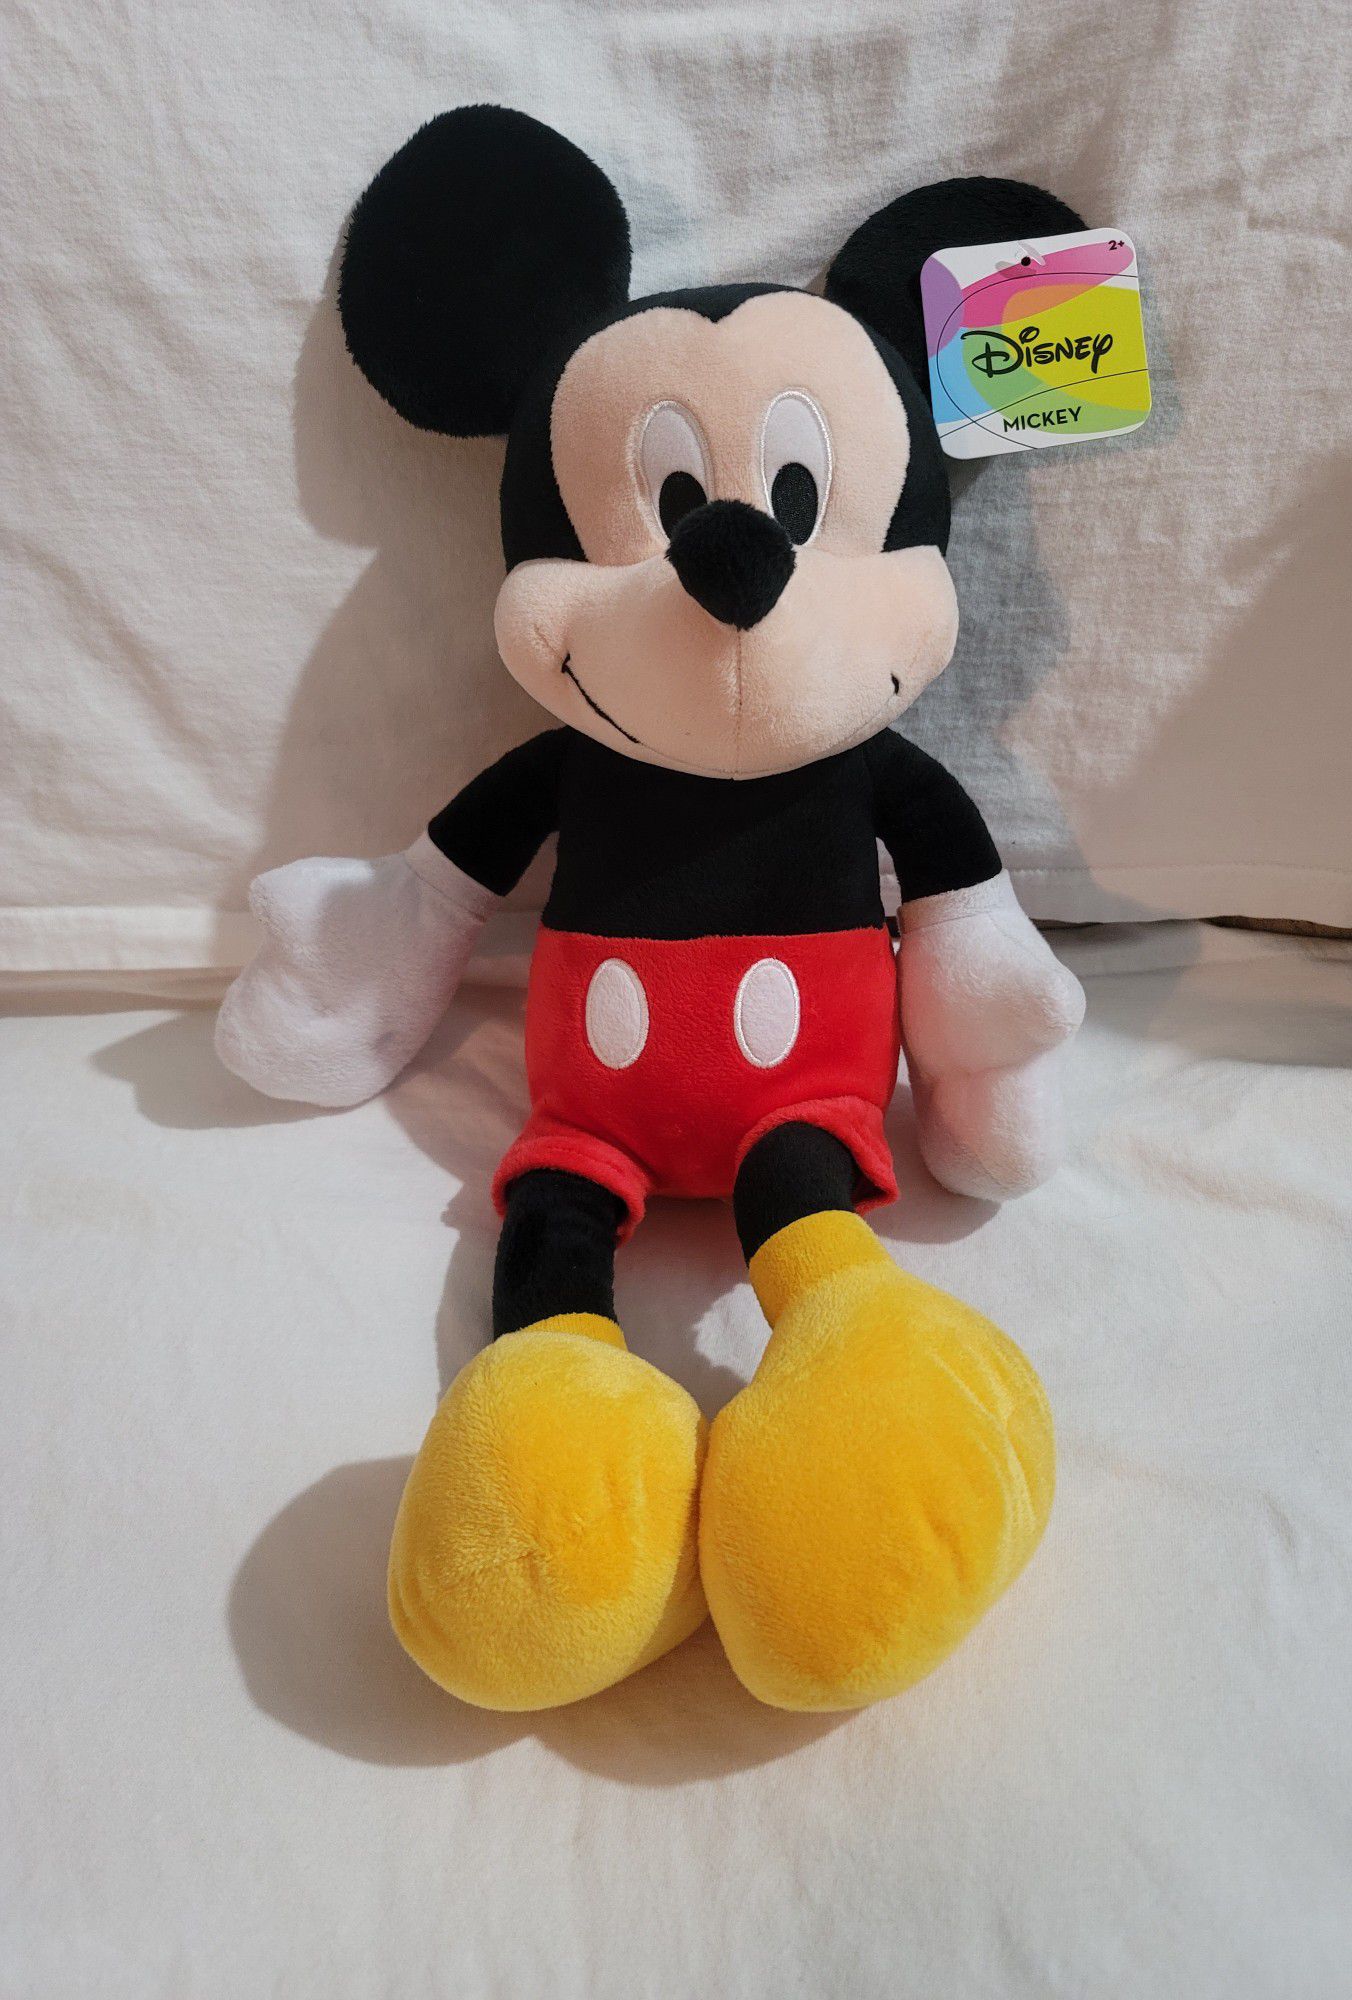 Disney Mickey Mouse 18inch plush Doll